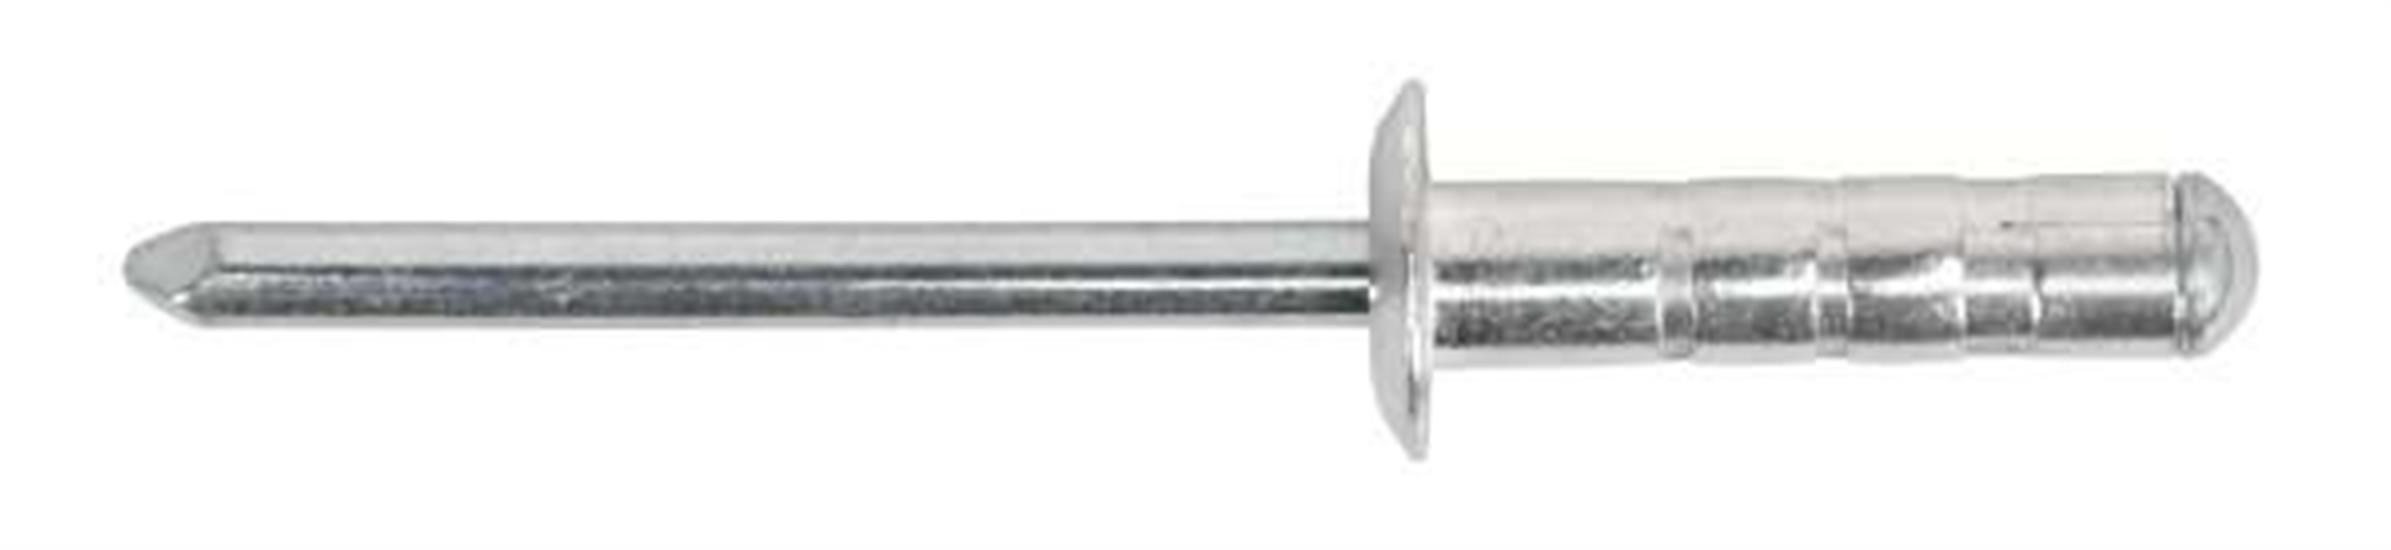 Sealey RM4827S - Aluminium Multi-Grip Rivet Standard Flange 4.8 x 27mm Pack of 200